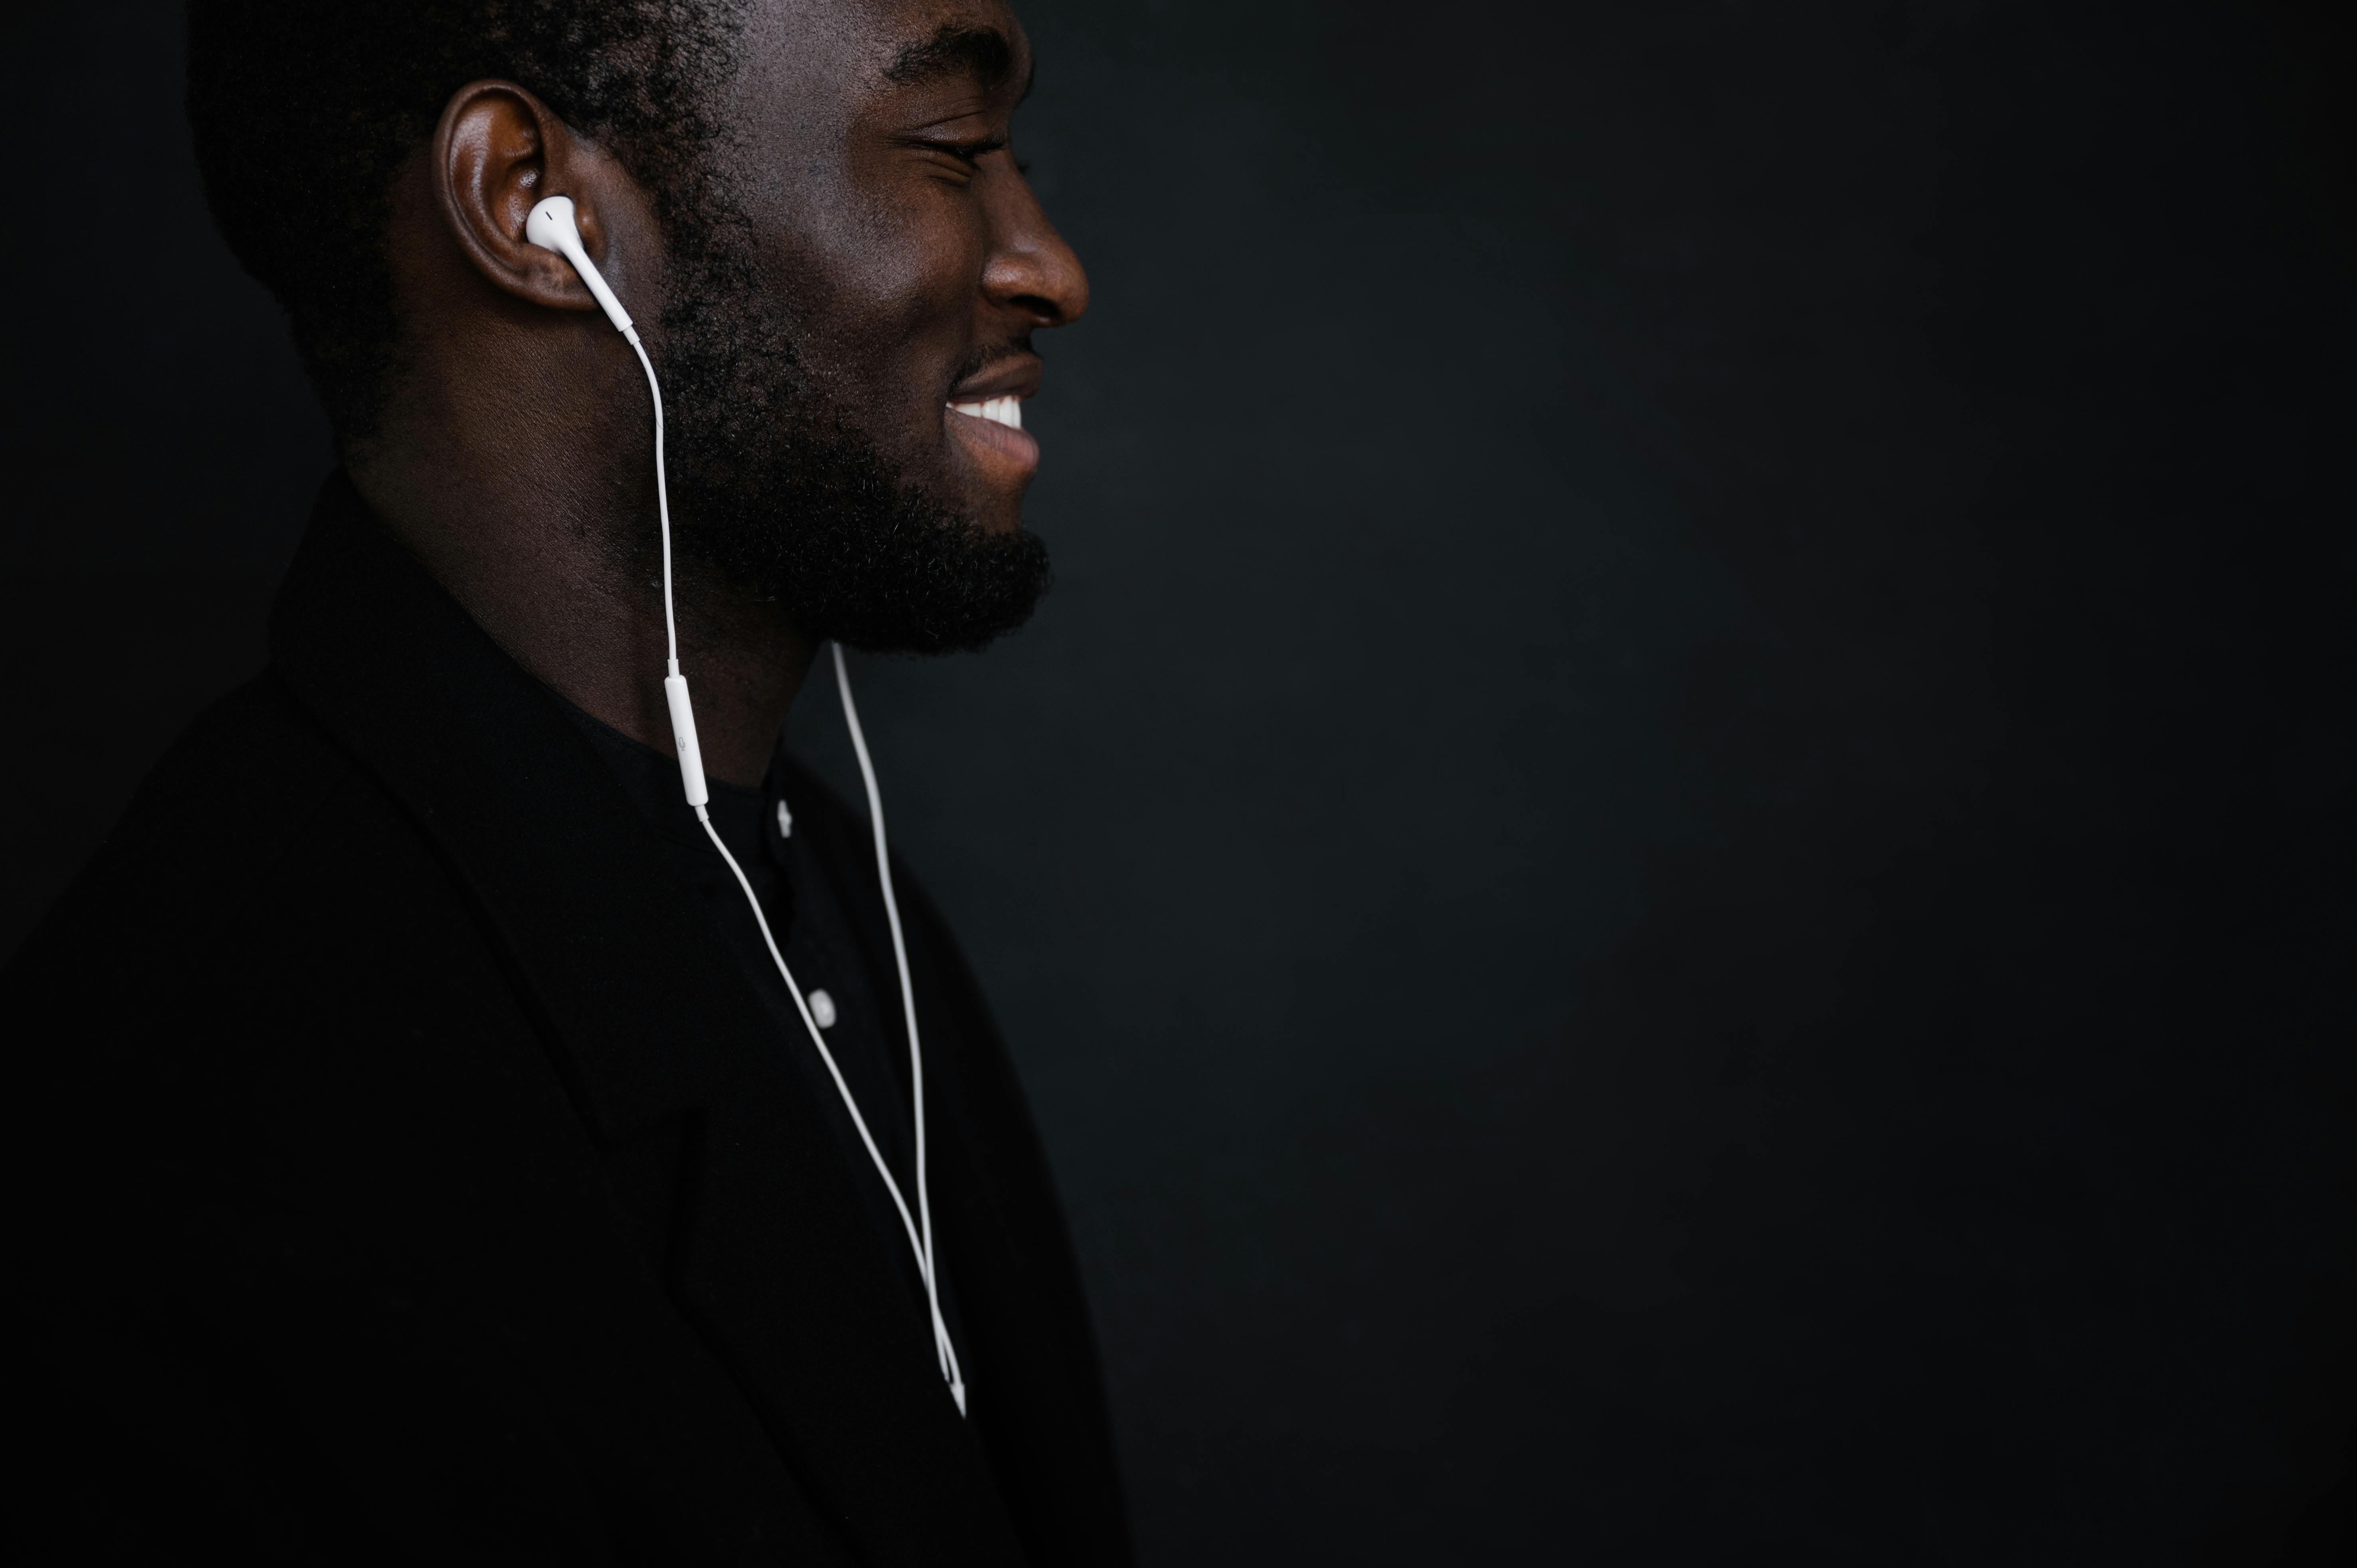 crop black man with earphones listening to music